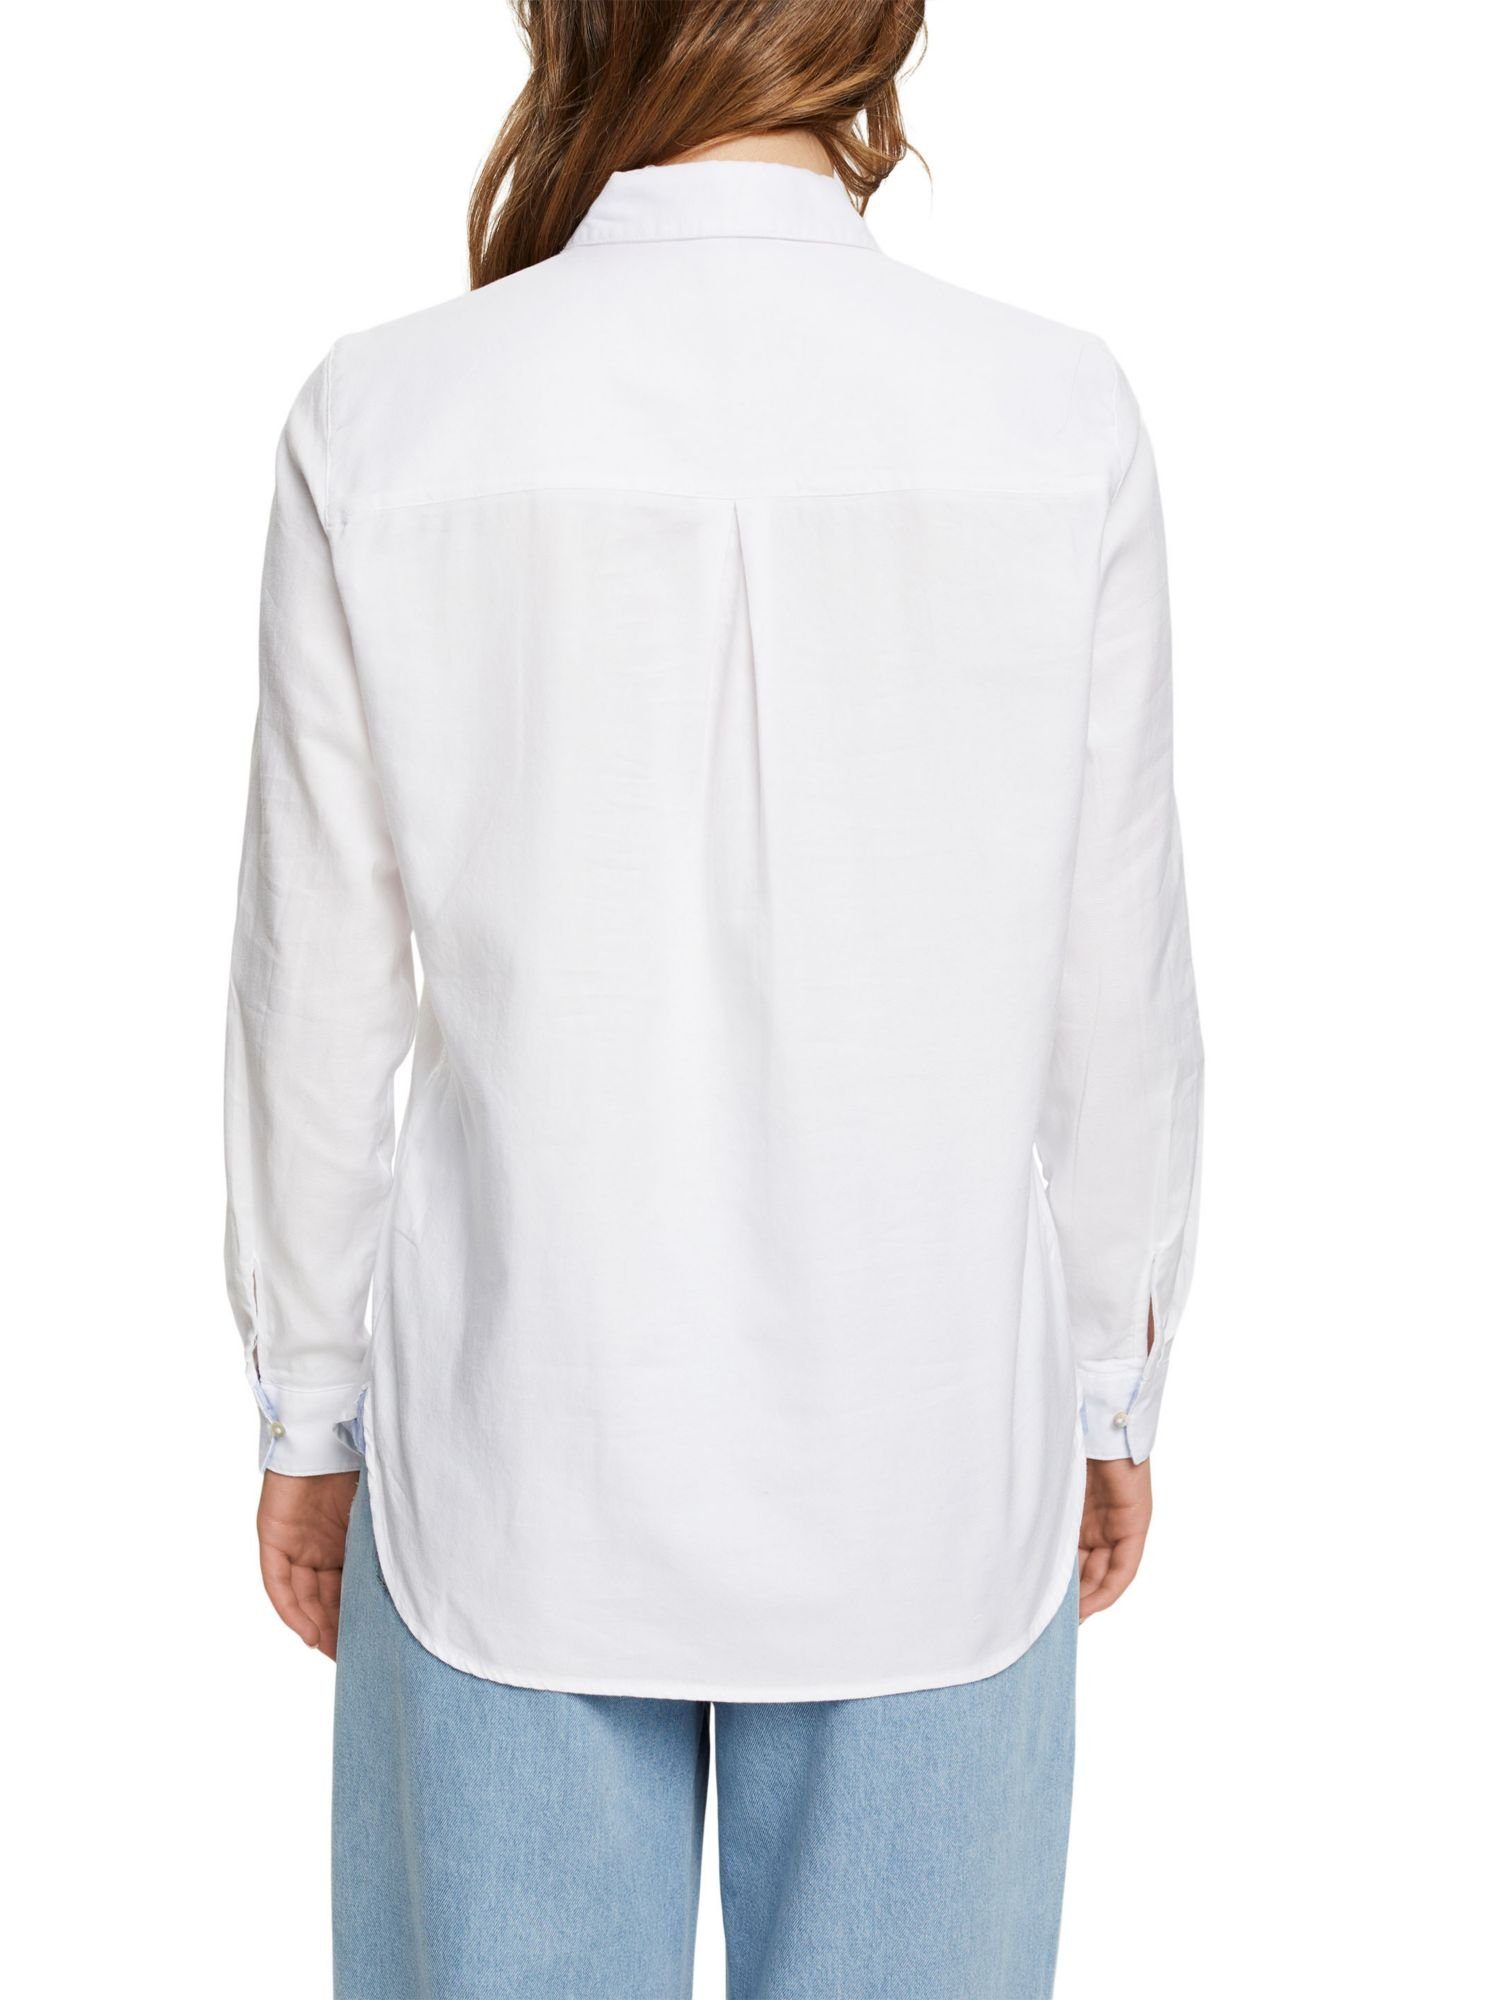 WHITE Baumwolle Esprit 100% aus Langarmbluse Hemd-Bluse